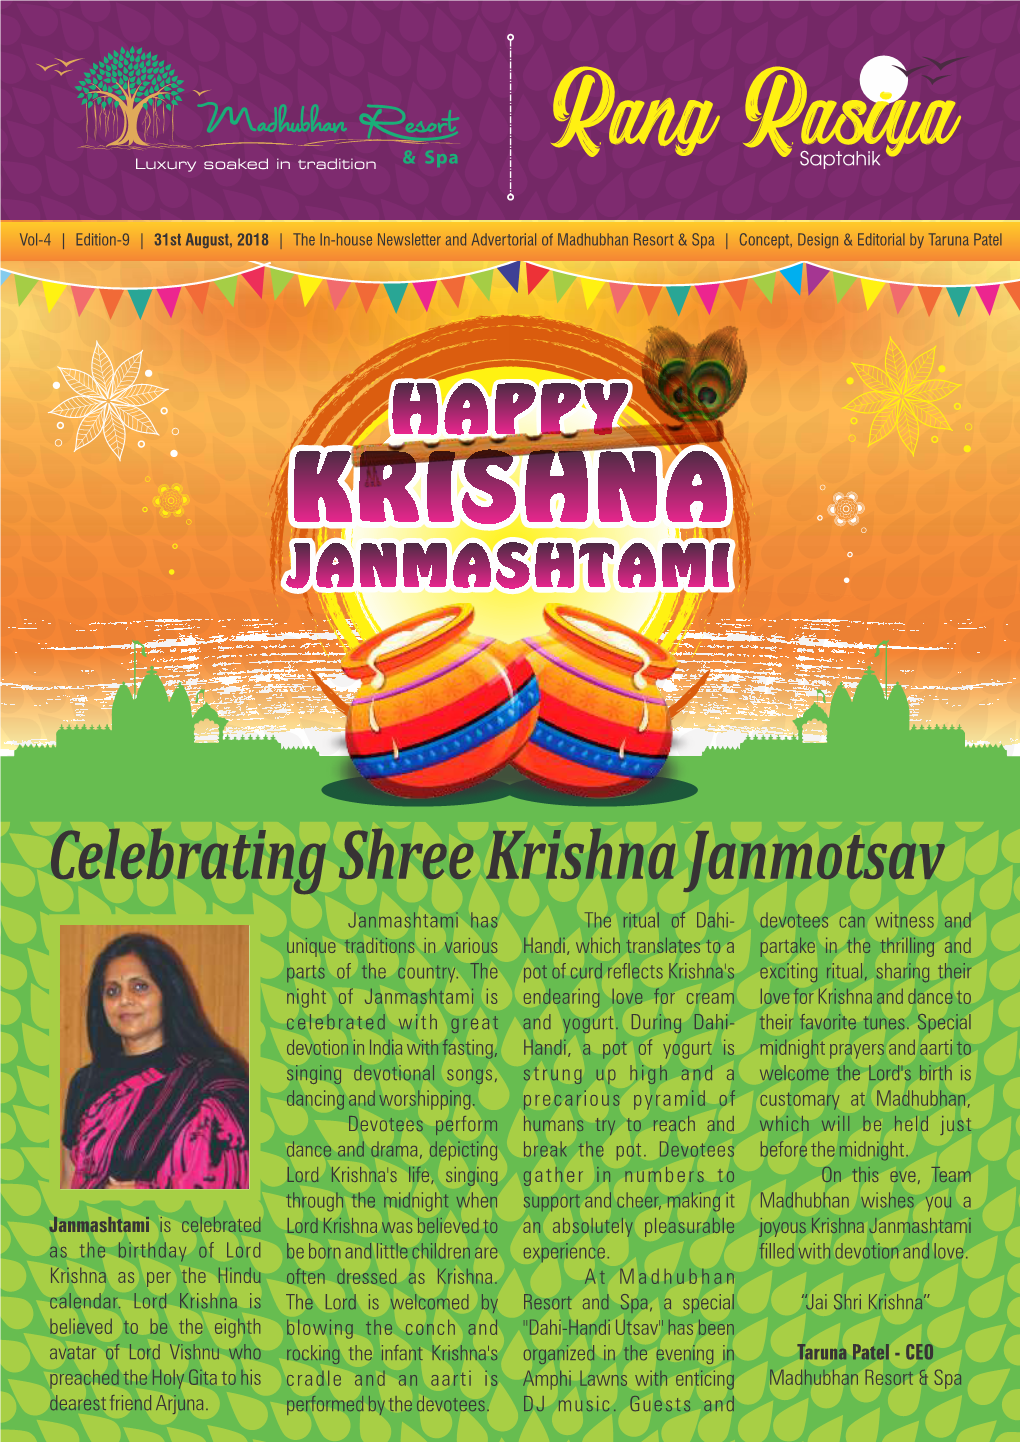 Celebrating Shree Krishna Janmotsav